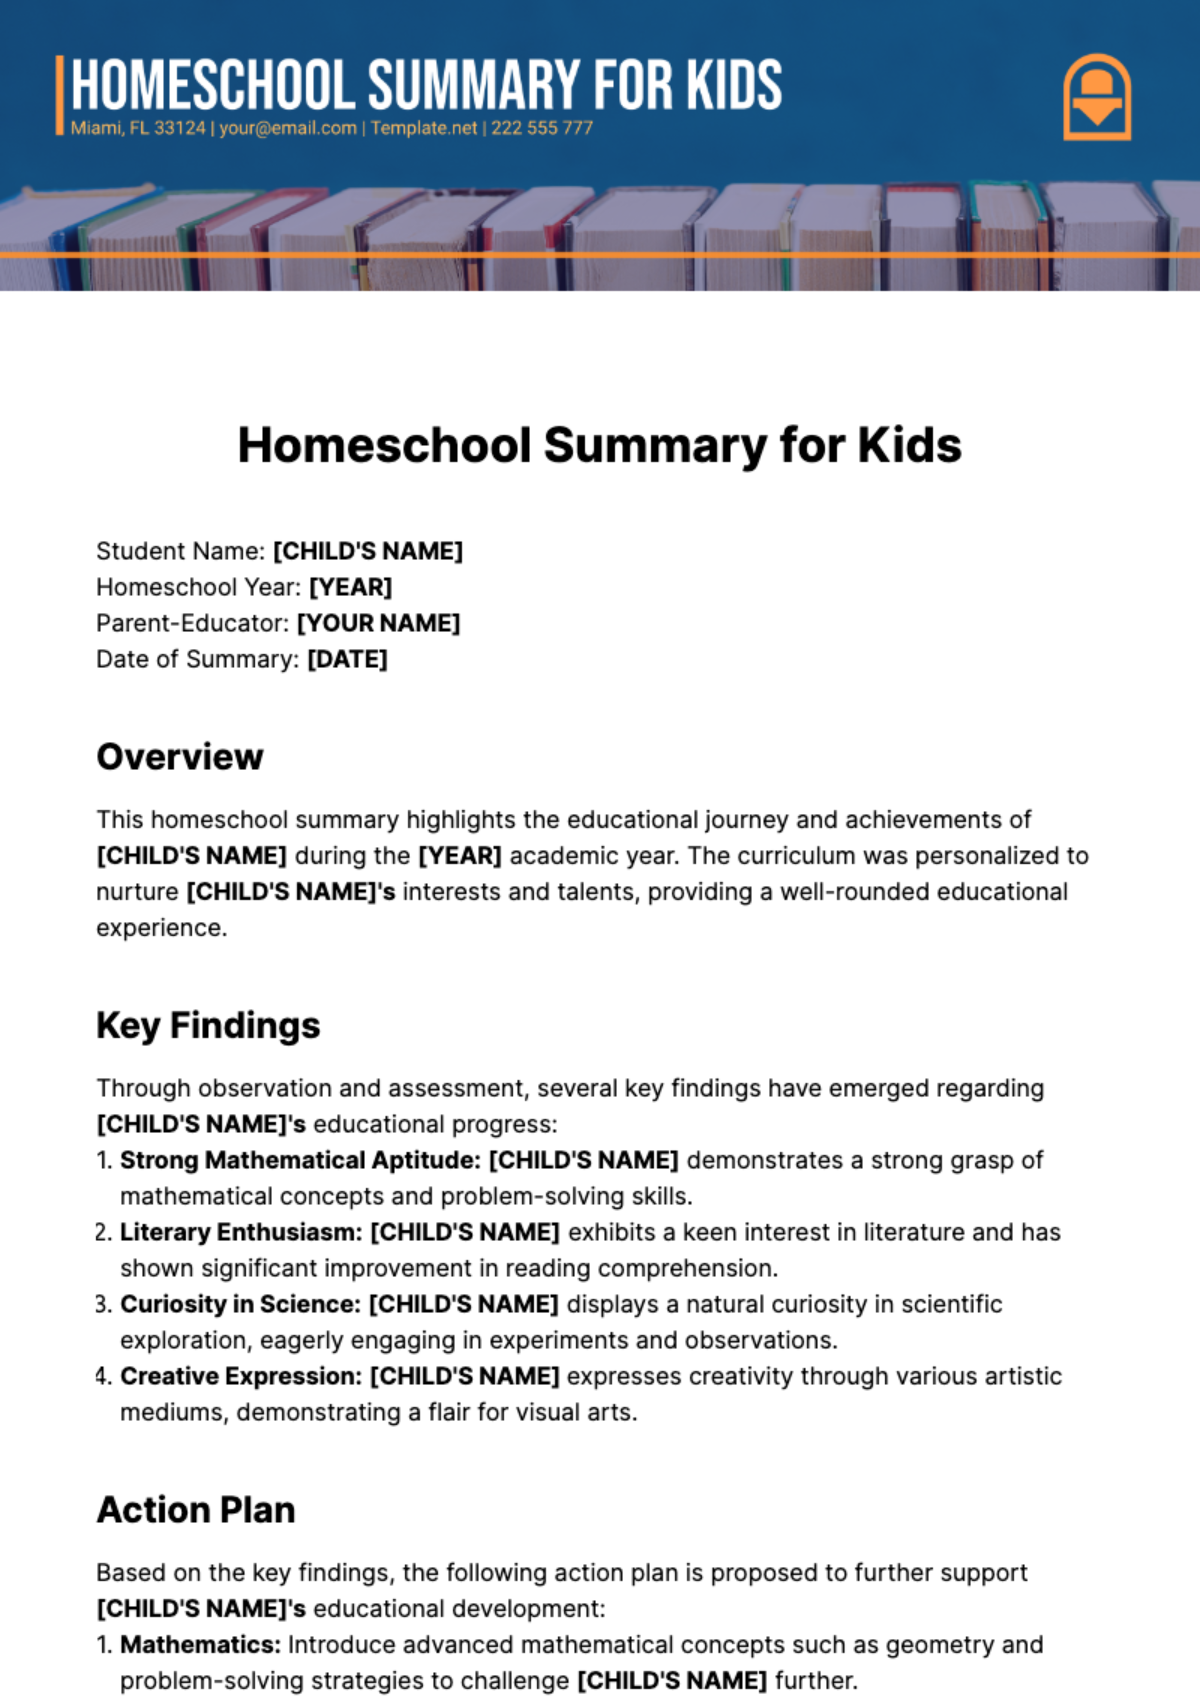 Homeschool Summary for Kids Template